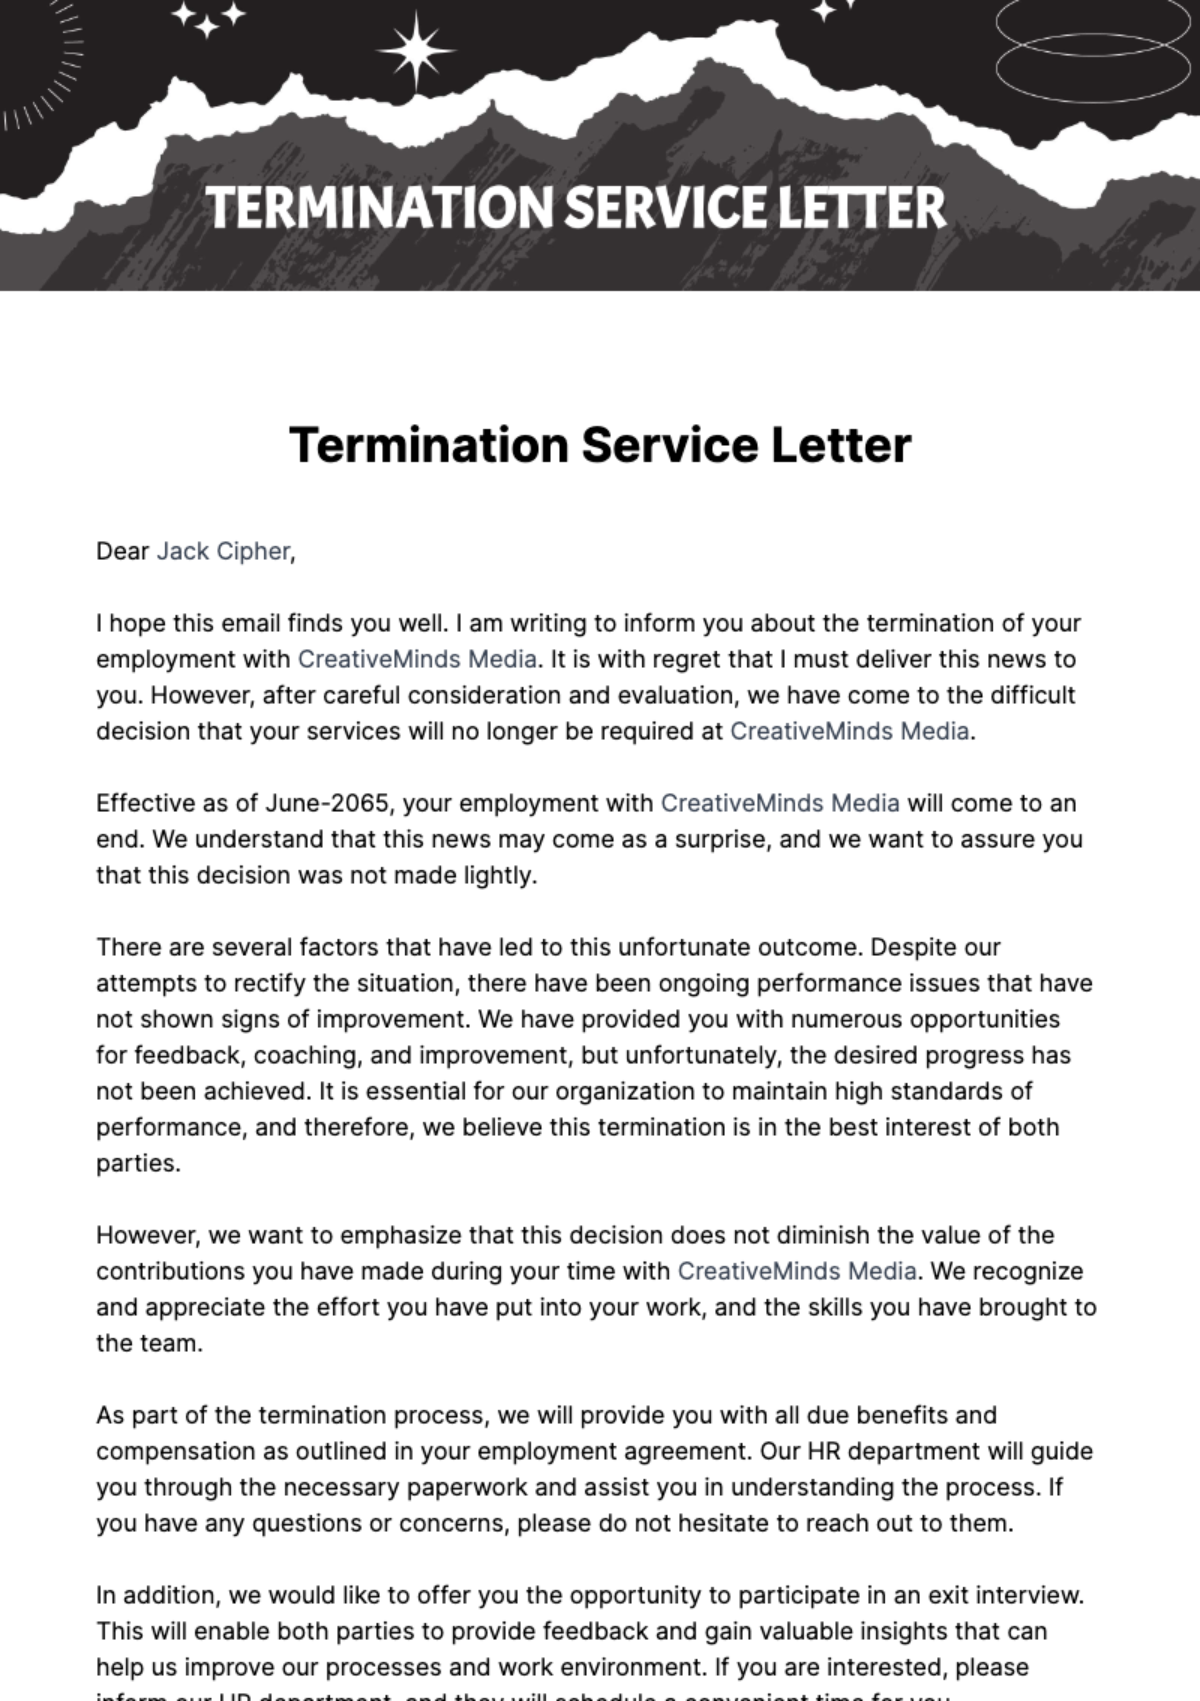 Termination Service Letter Template